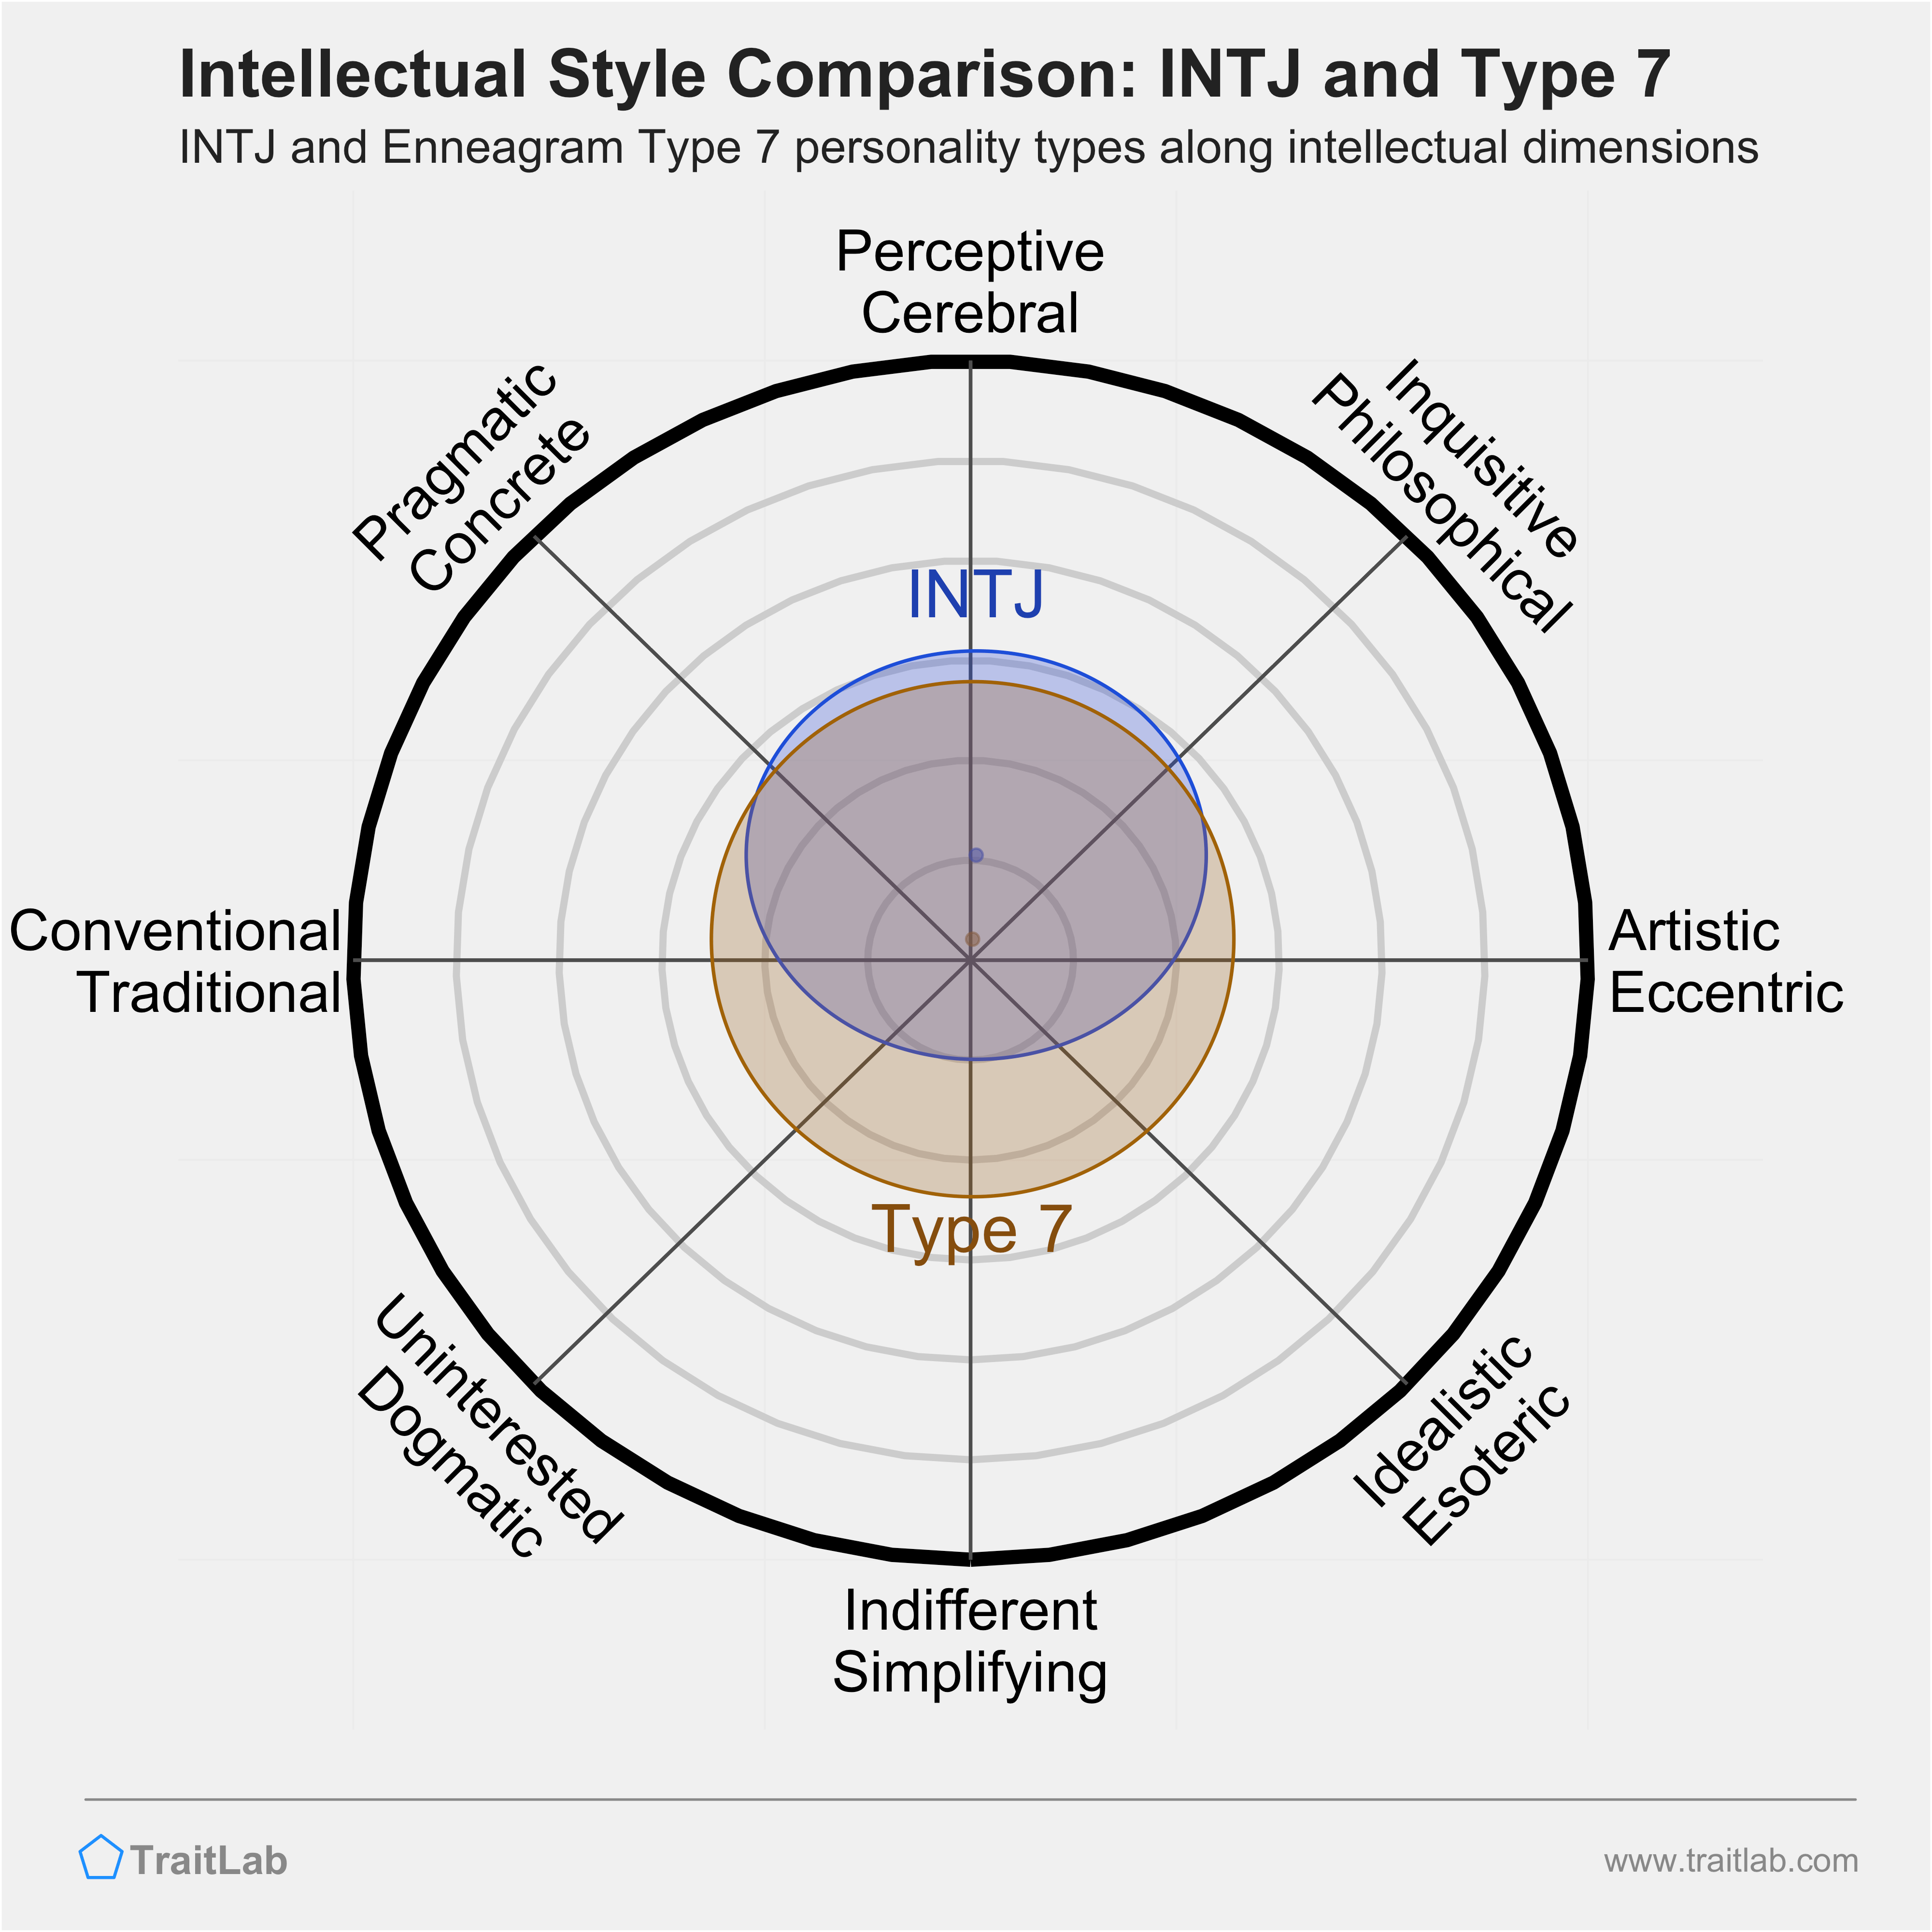 INTJ and Type 7 comparison across intellectual dimensions